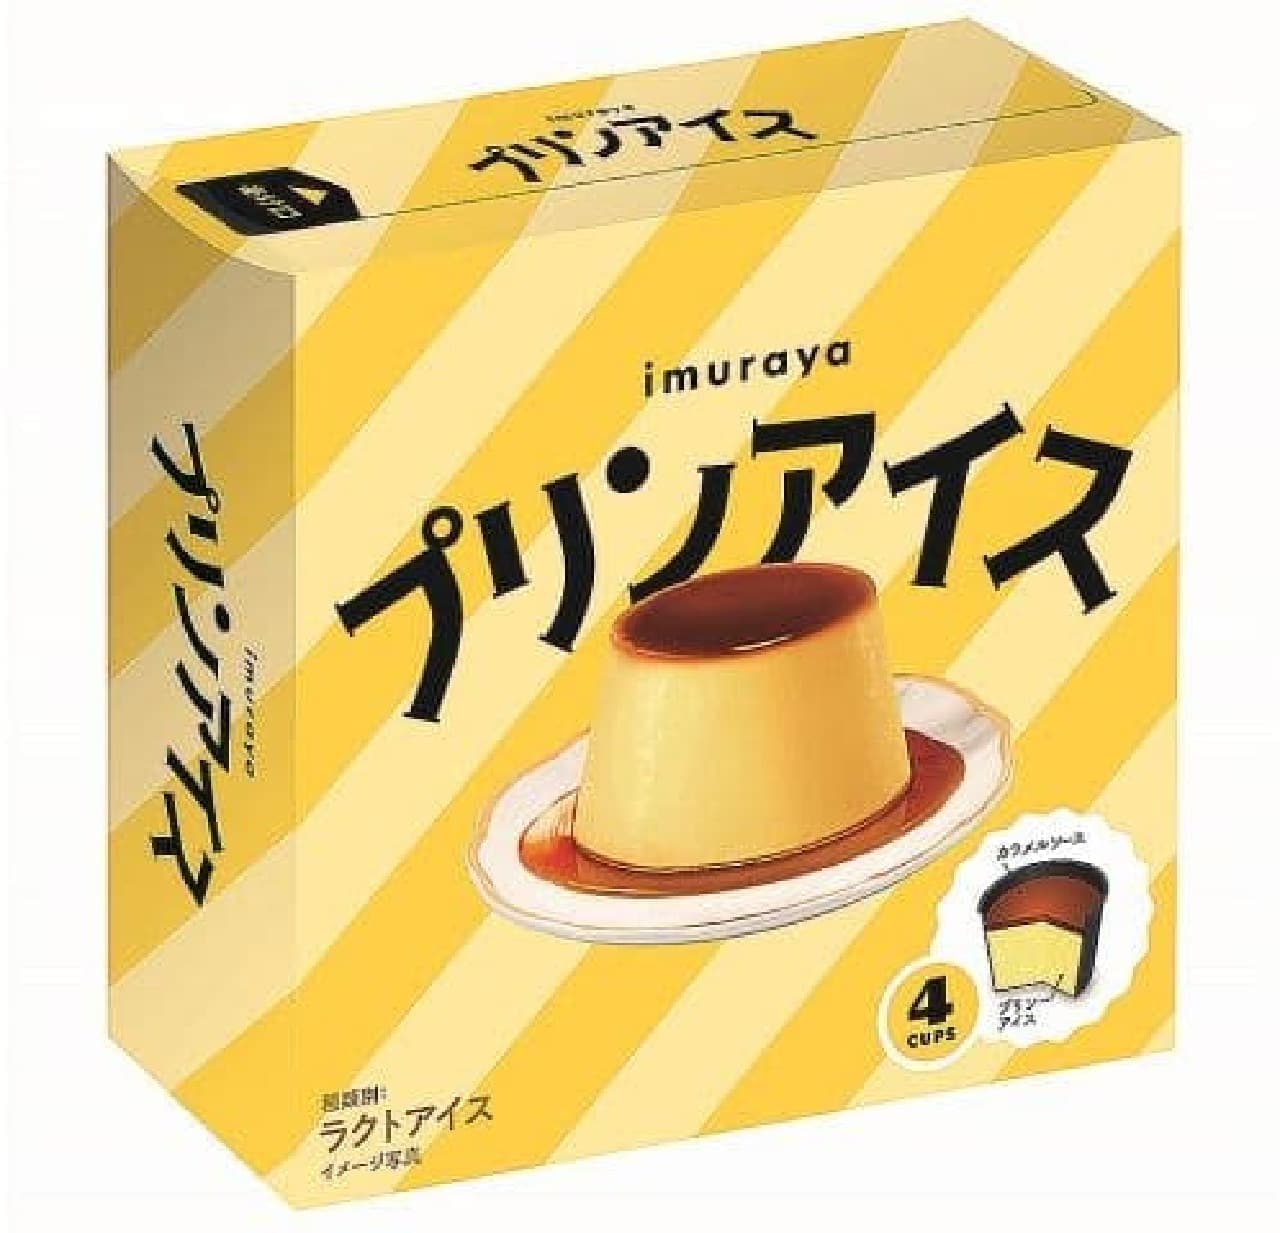 7-ELEVEN "Imuraya Pudding Ice Cream Multi